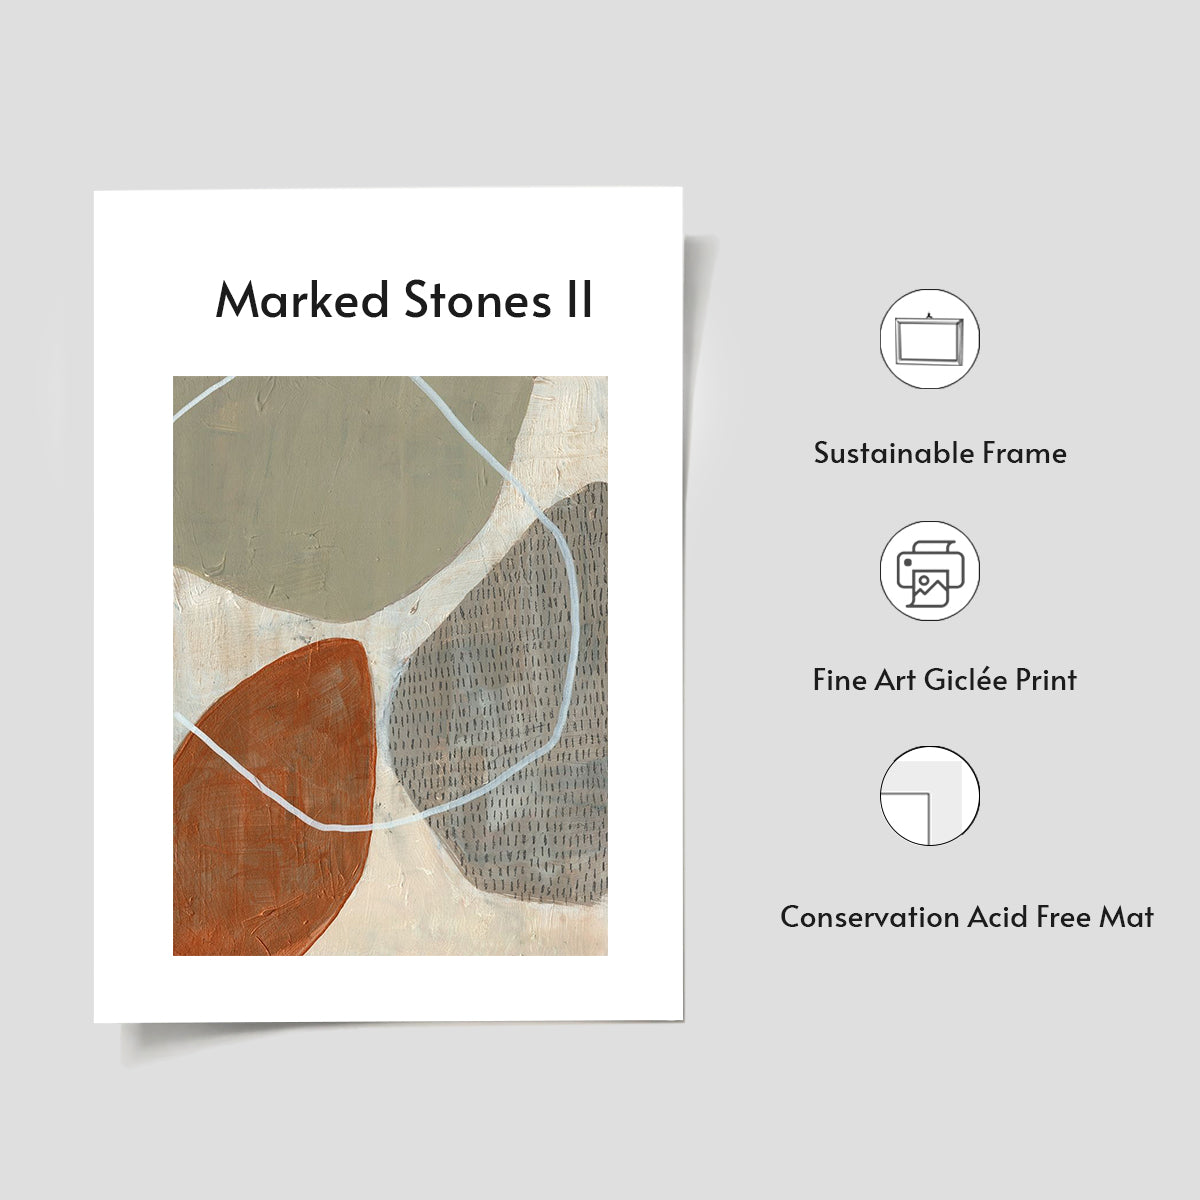 Marked Stones II